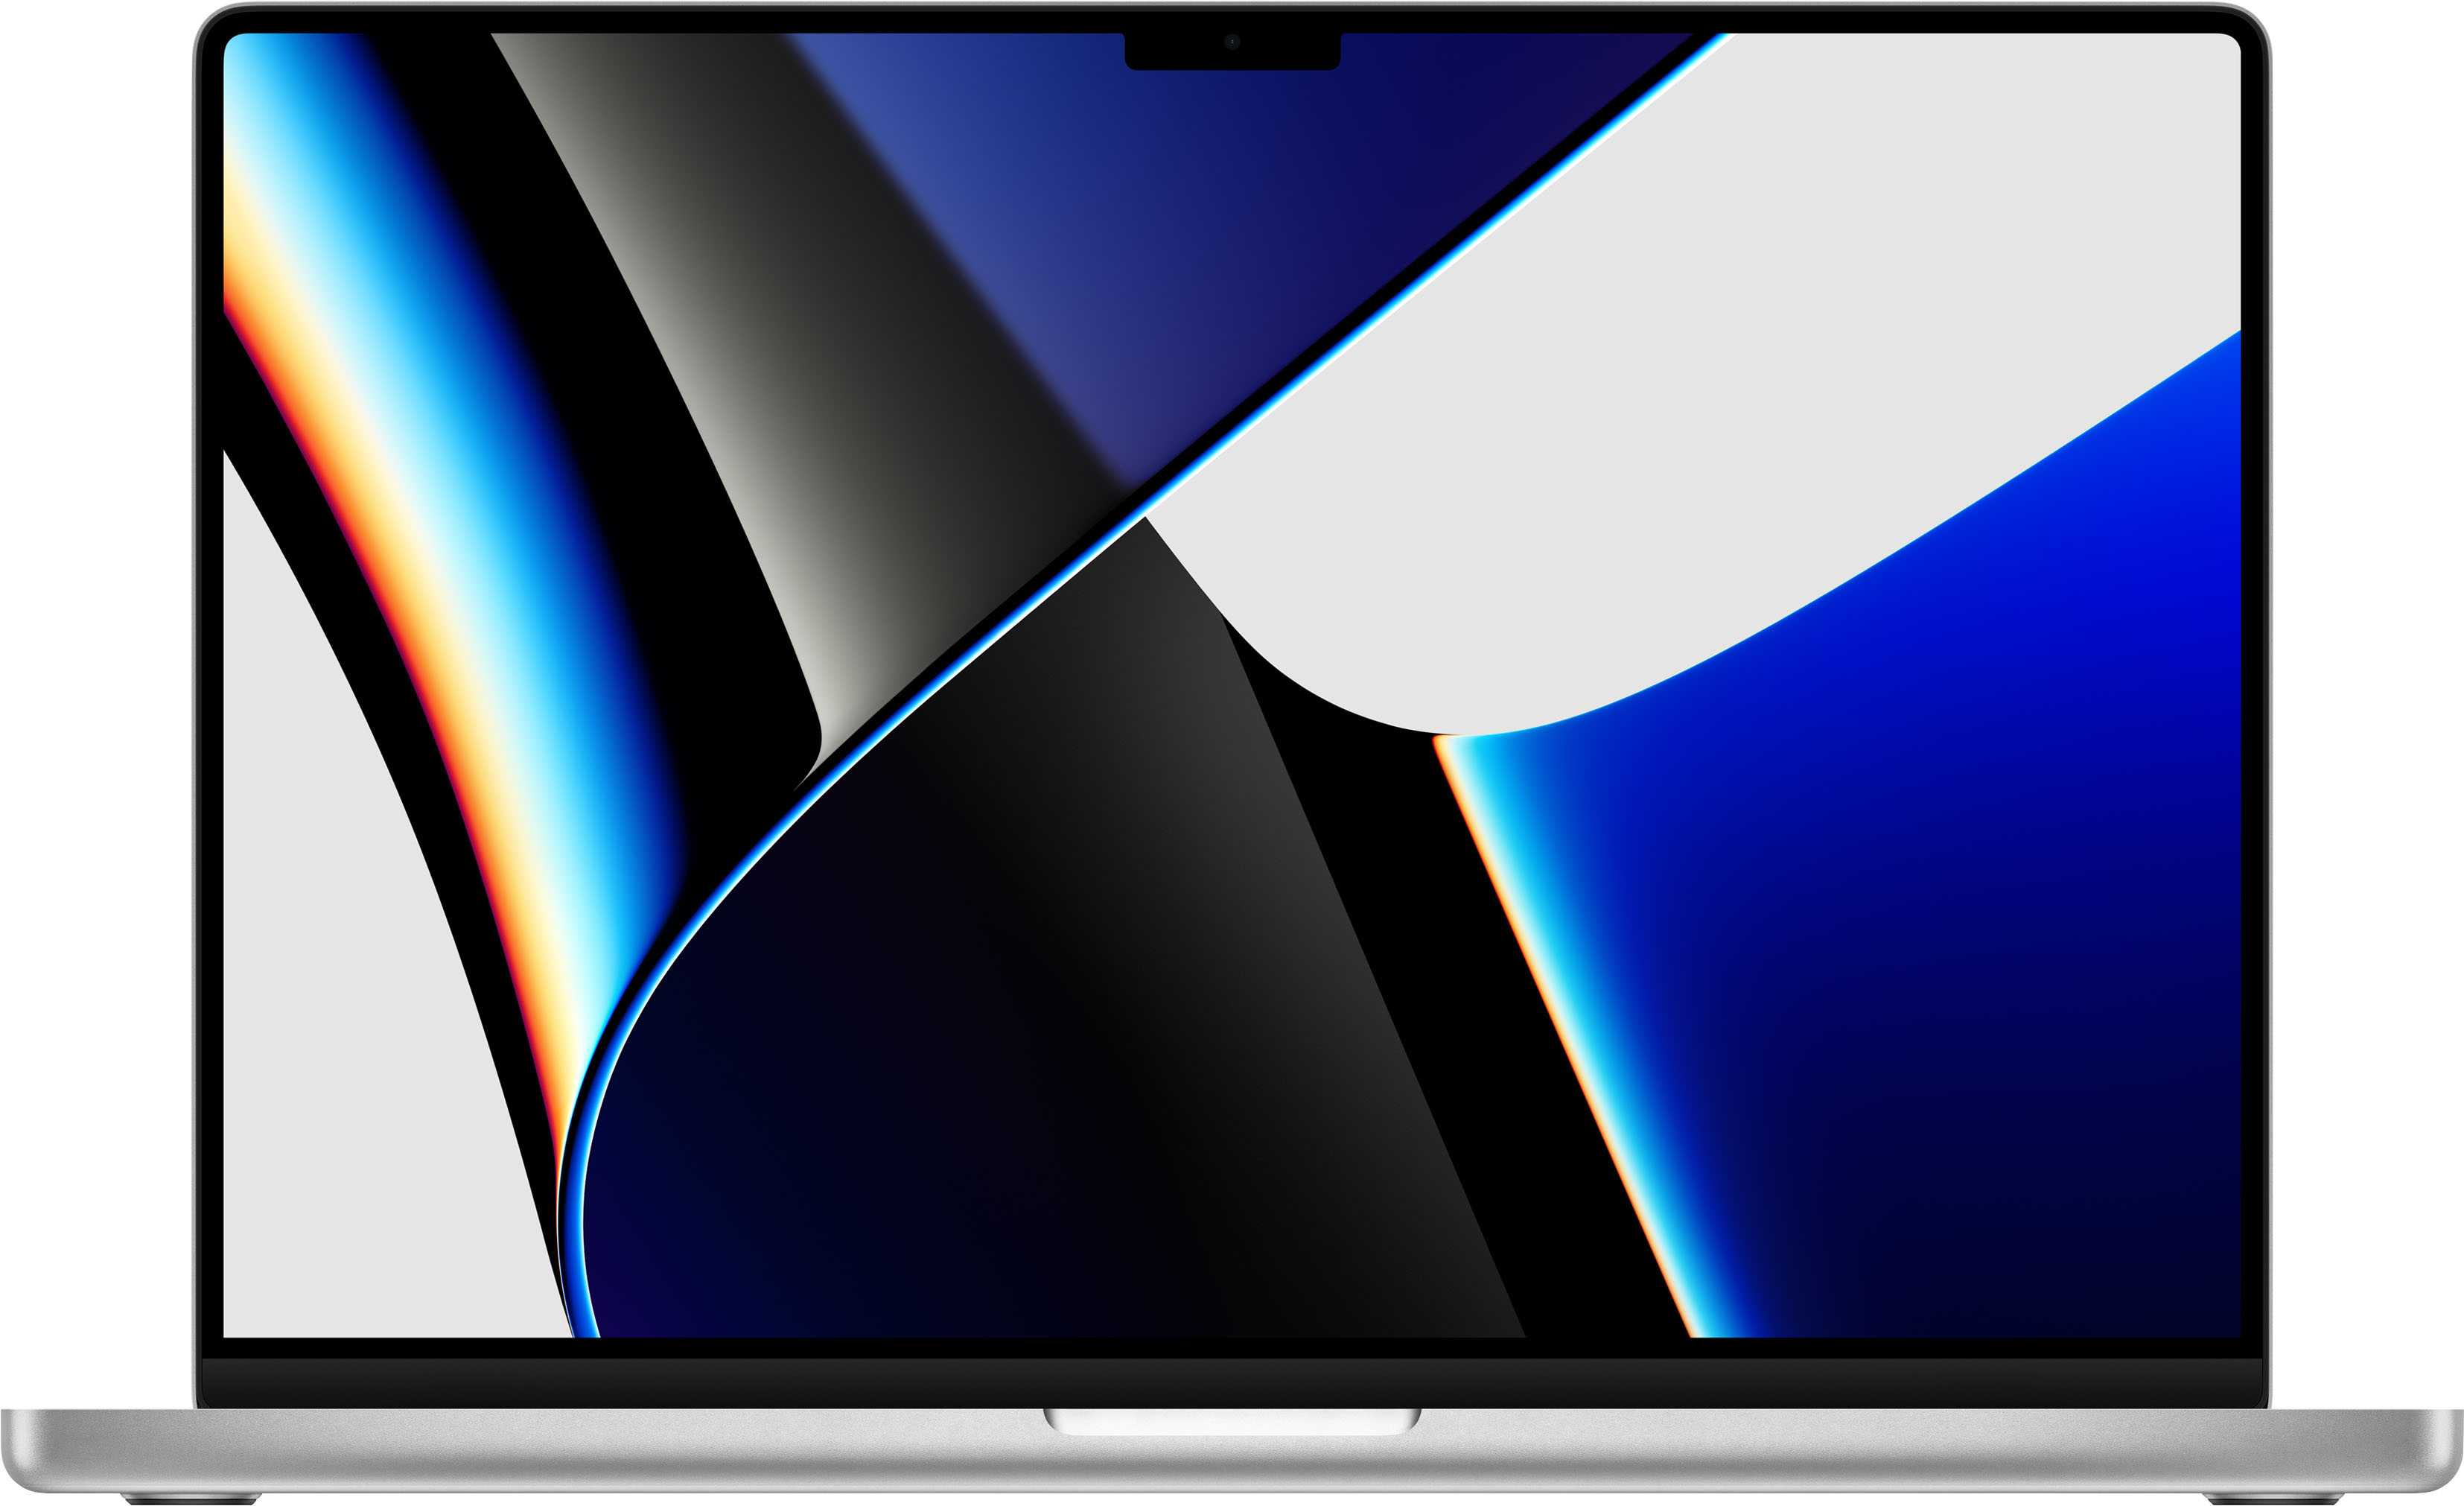 MacBook Pro 14" Laptop - Apple M1 Pro chip - 16GB Memory - 512GB SSD (Latest Model) - Space Gray